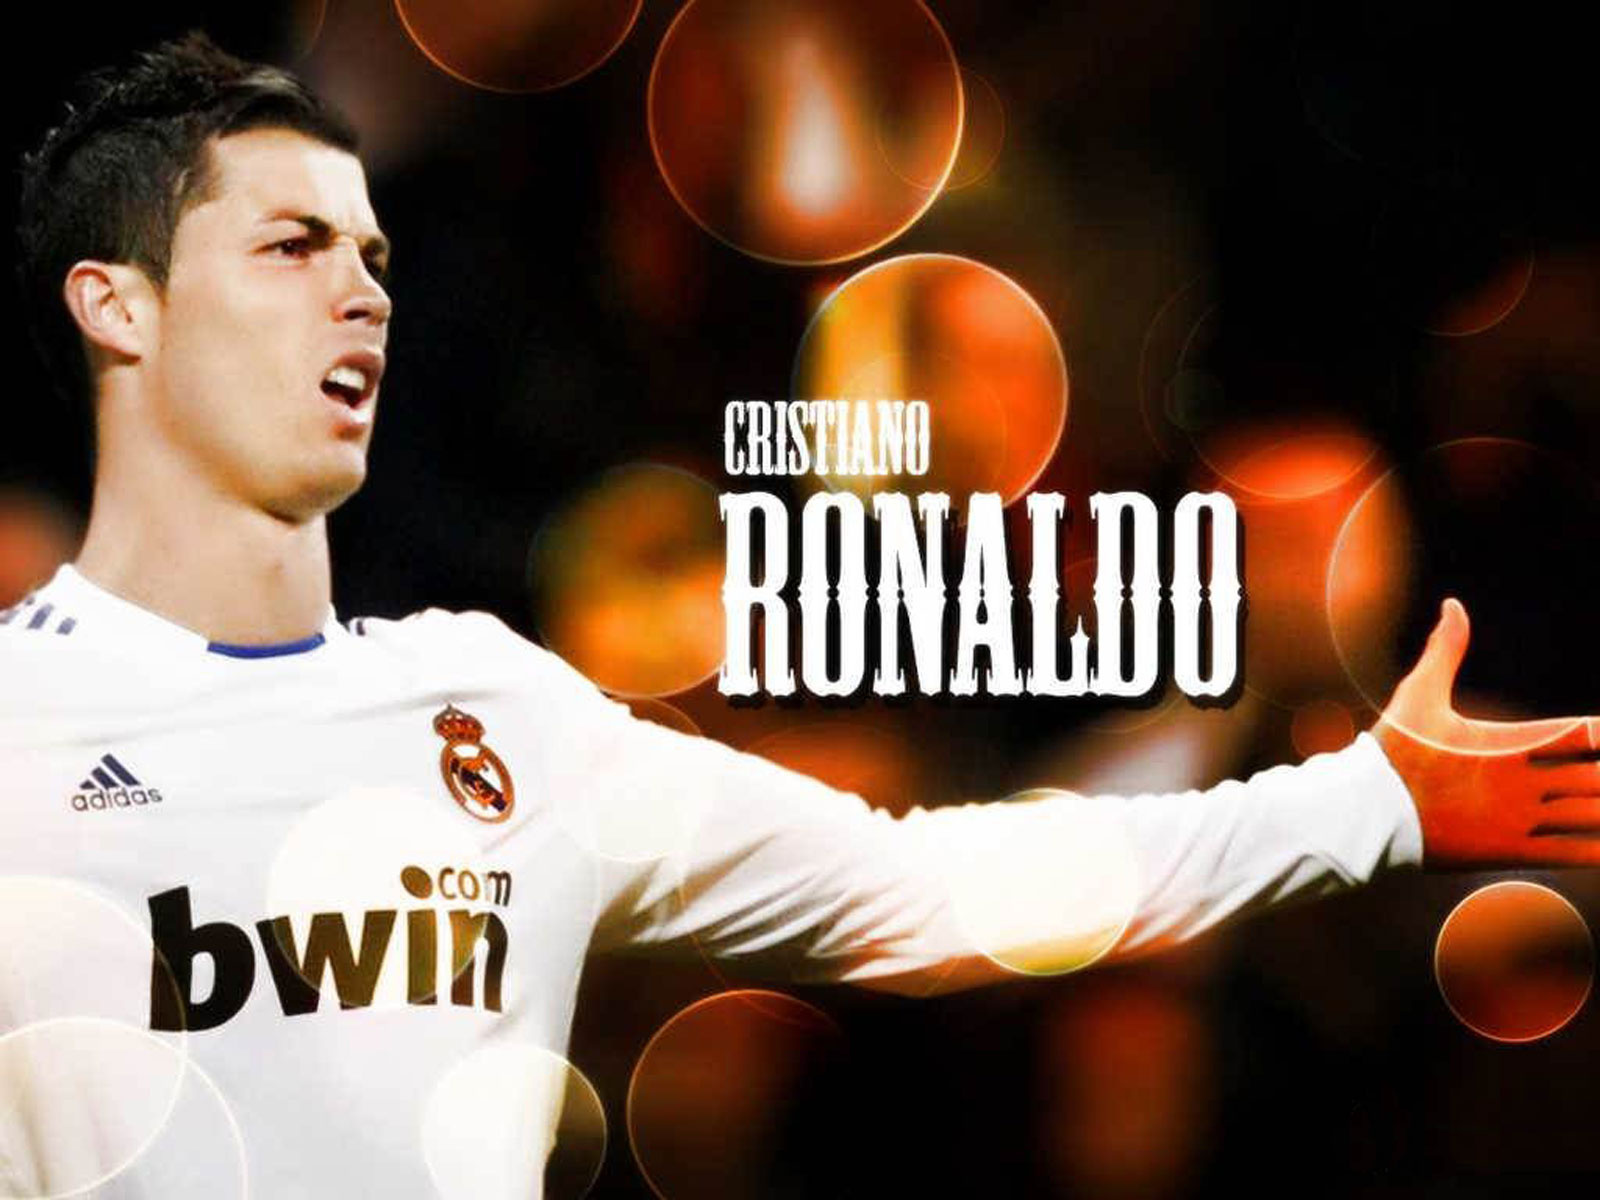 http://1.bp.blogspot.com/-RHaeHmYUZpE/UGQbnQYnXiI/AAAAAAAAHJc/E7Xw6r3Lcr8/s1600/Cristiano-Ronaldo-2012-wallpaper-10.jpg